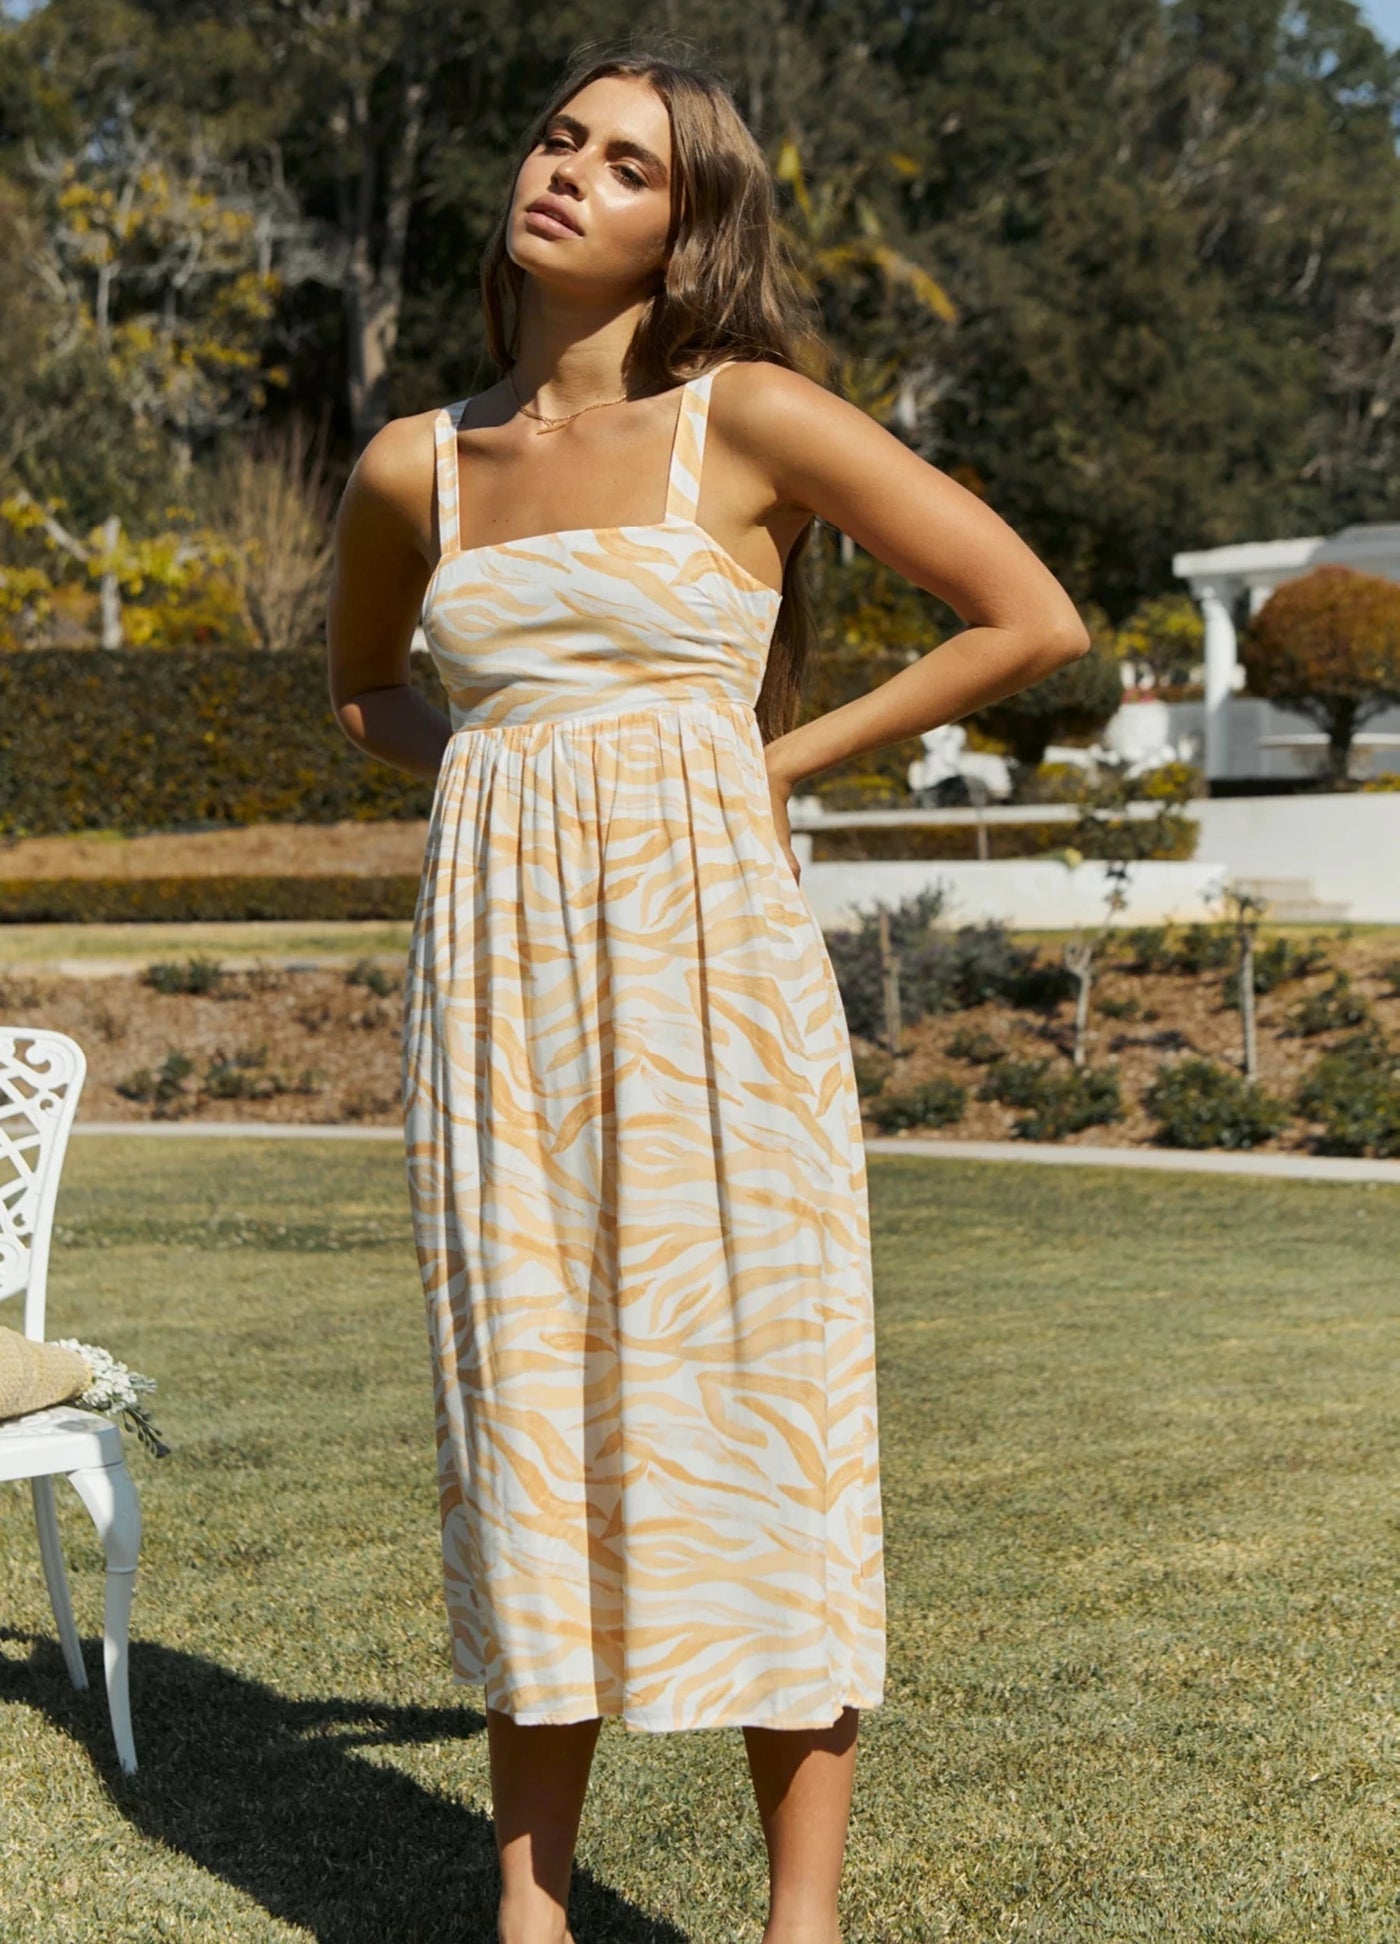 Model wearing the orange wave print dress